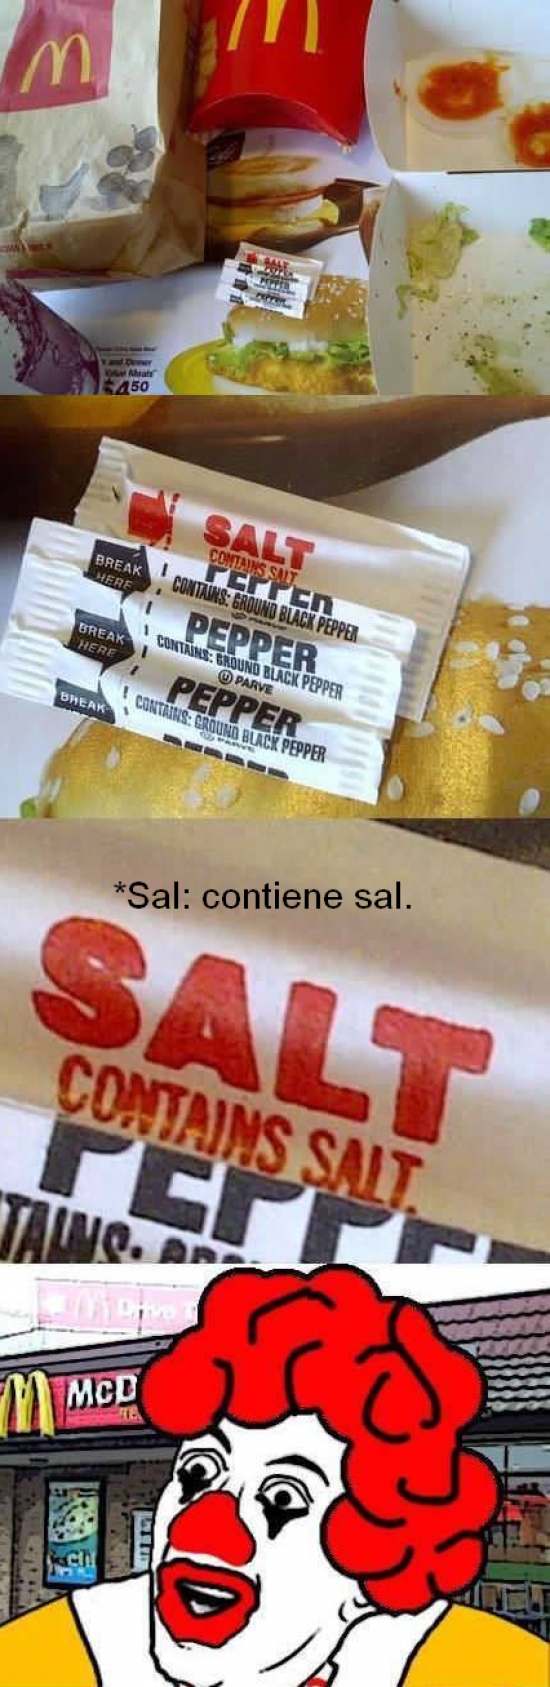 contiene sal,no me digas,payaso,ronald mcdonald's,sal,sal que lleva sal